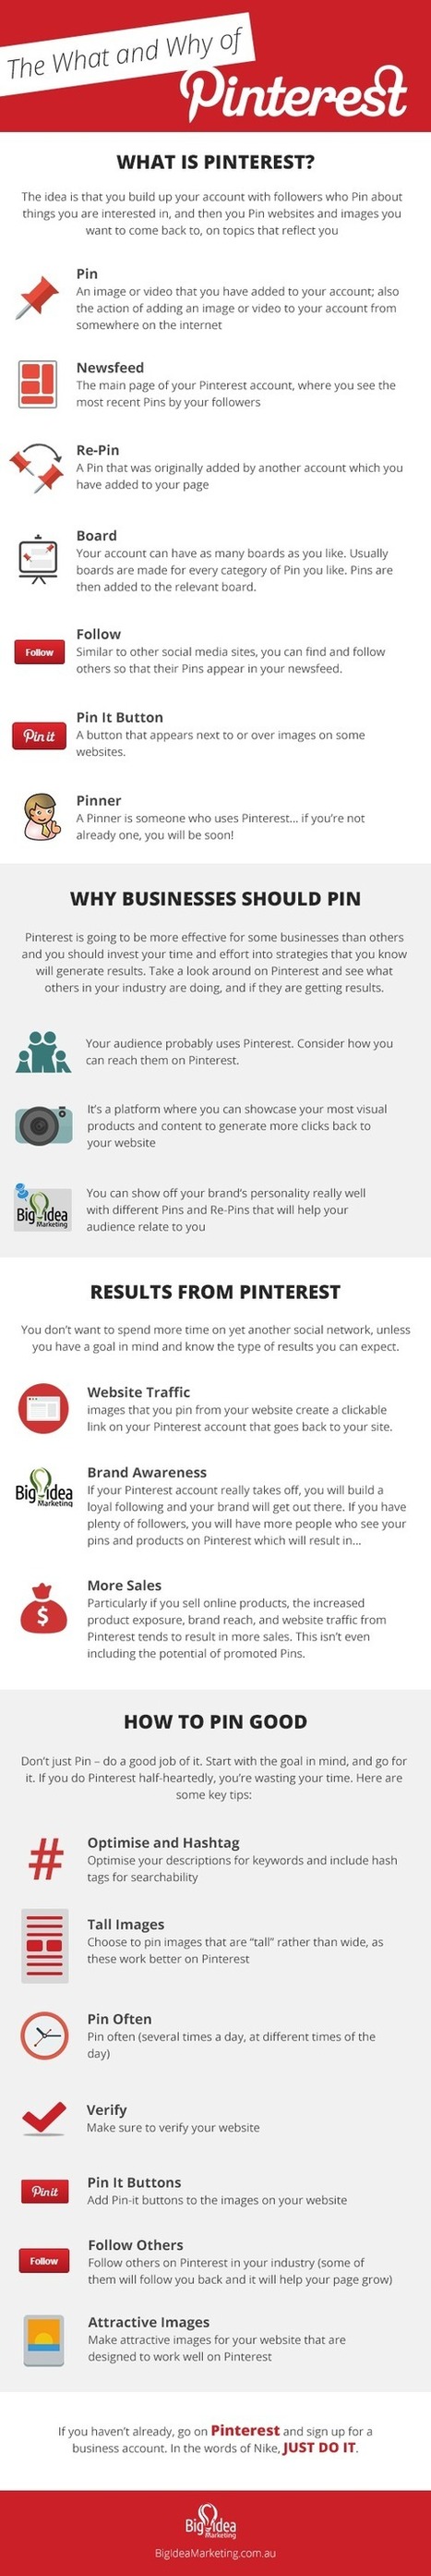 Qué y por qué de Pinterest para tu empresa #infografia #infographic #socialmedia | Seo, Social Media Marketing | Scoop.it